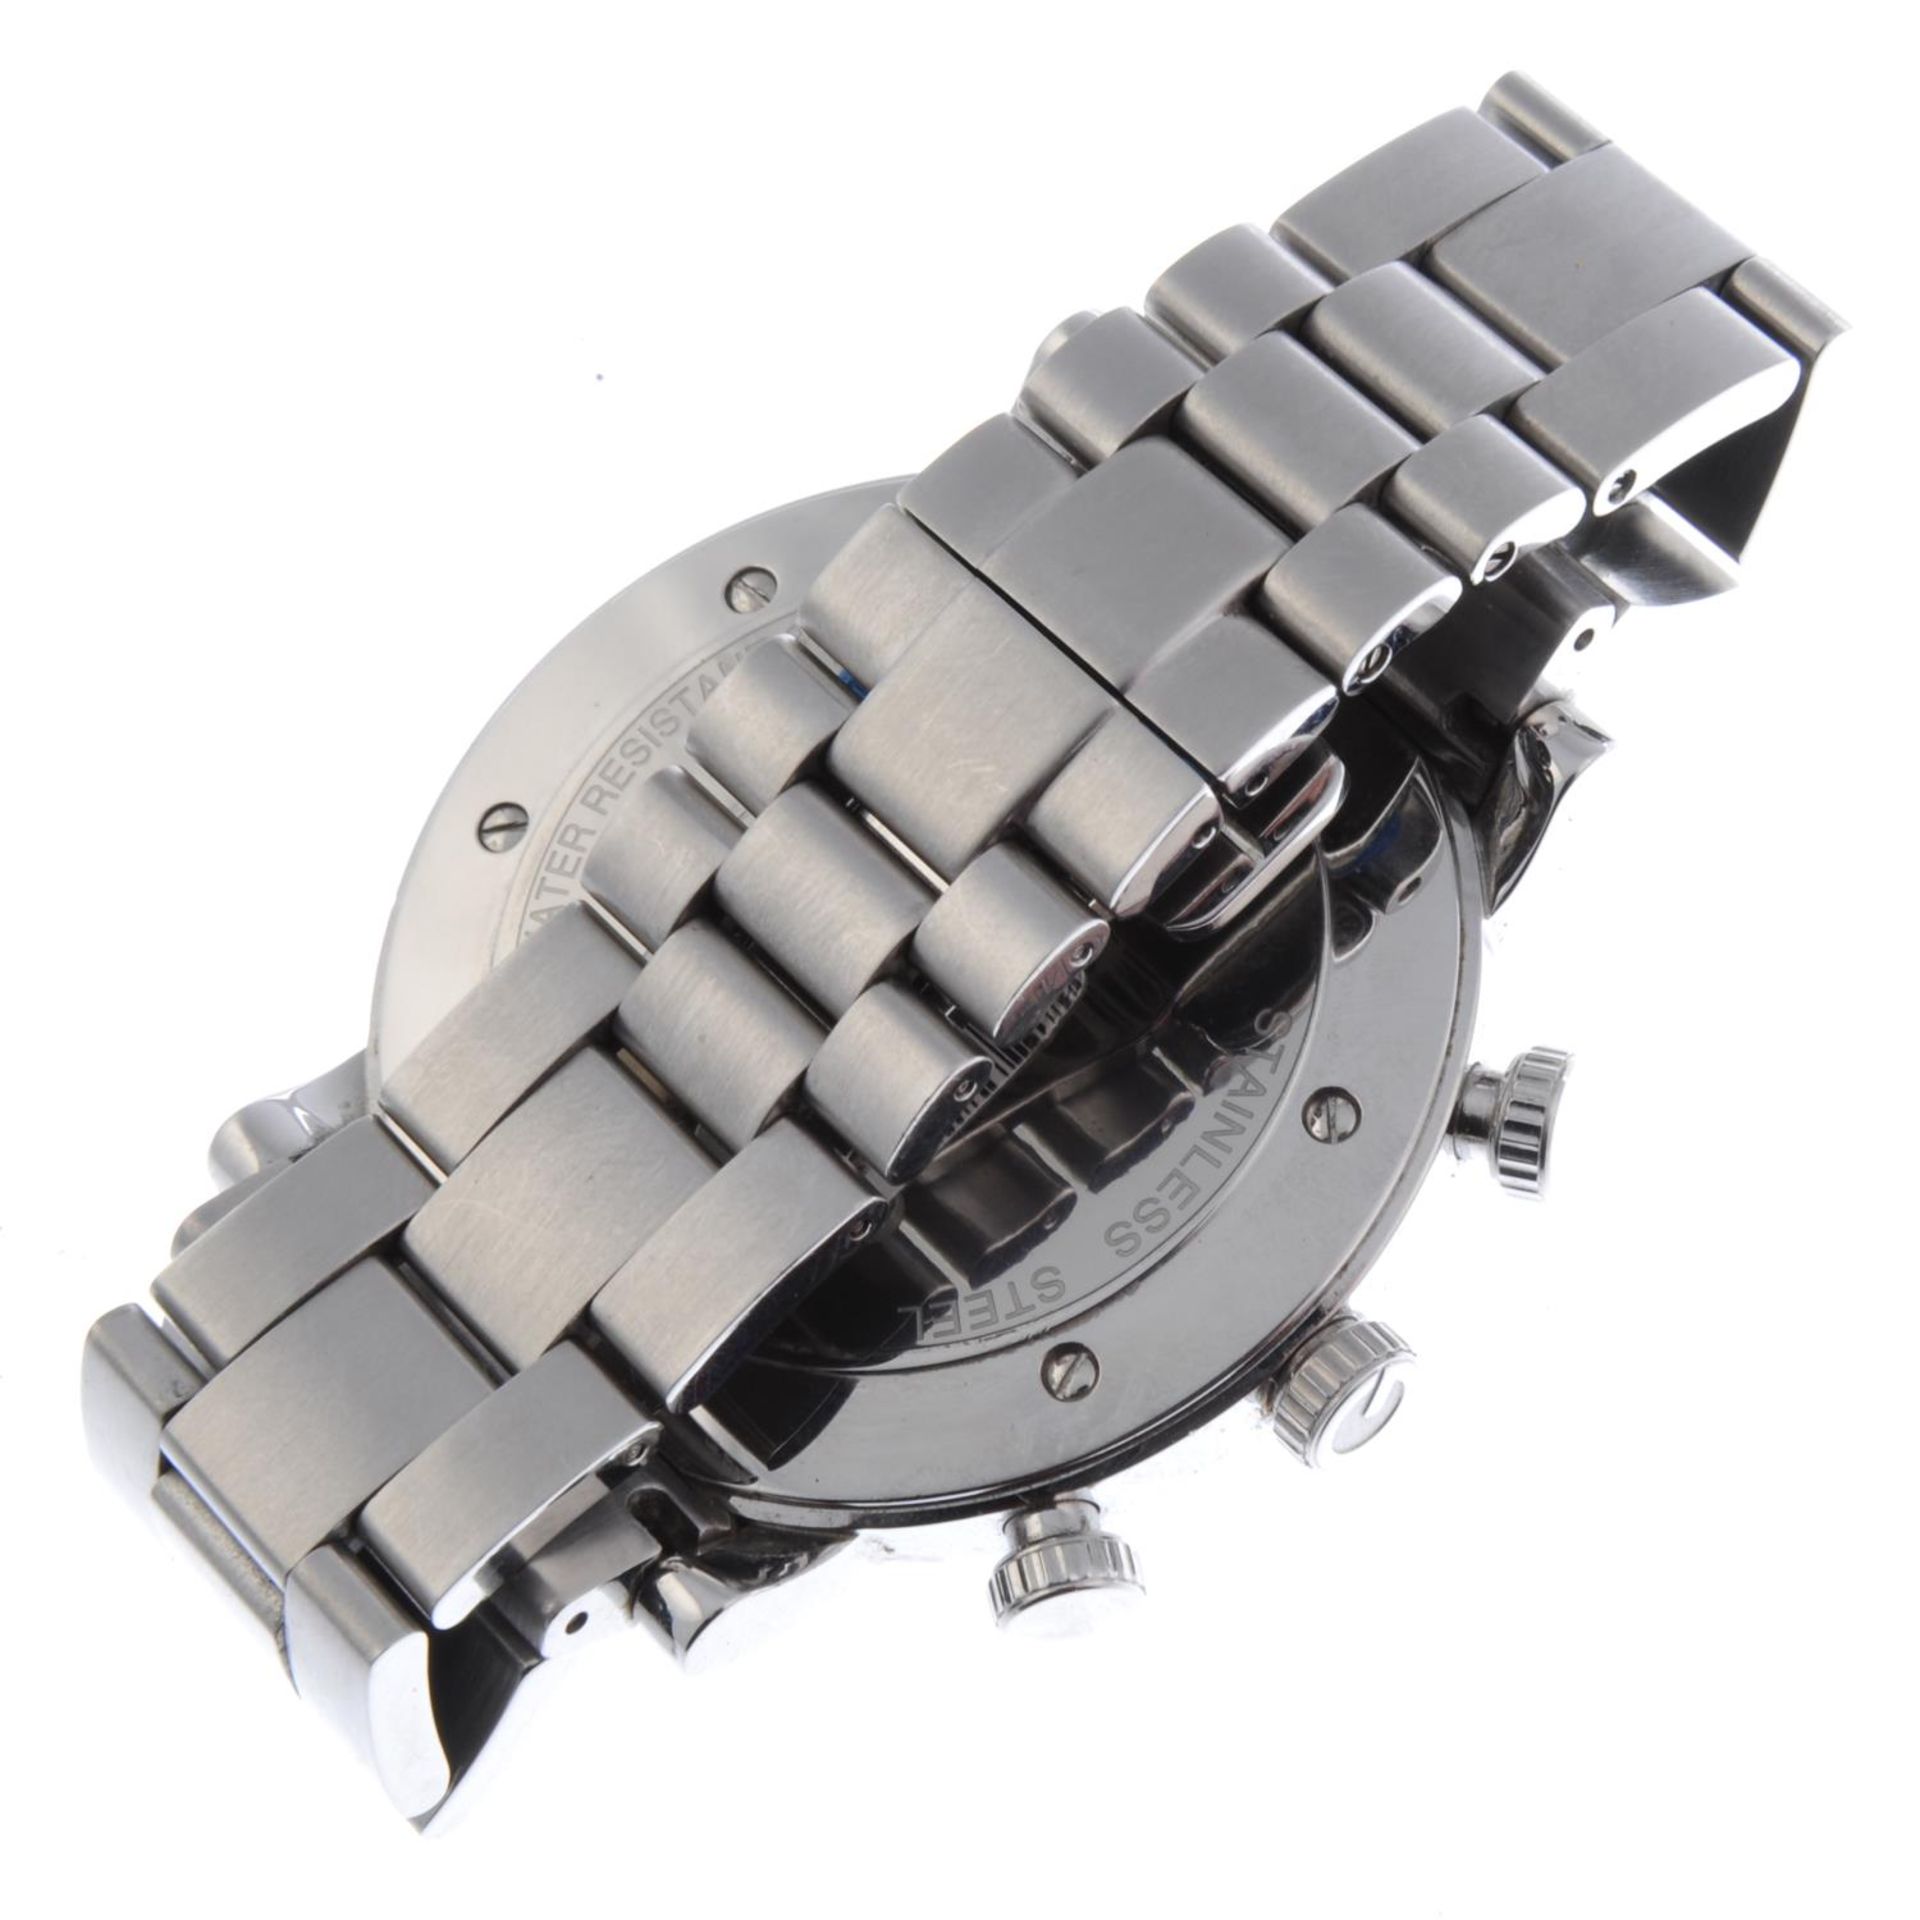 GUCCI - a gentleman's Chronoscope chronograph bracelet watch. - Bild 2 aus 4